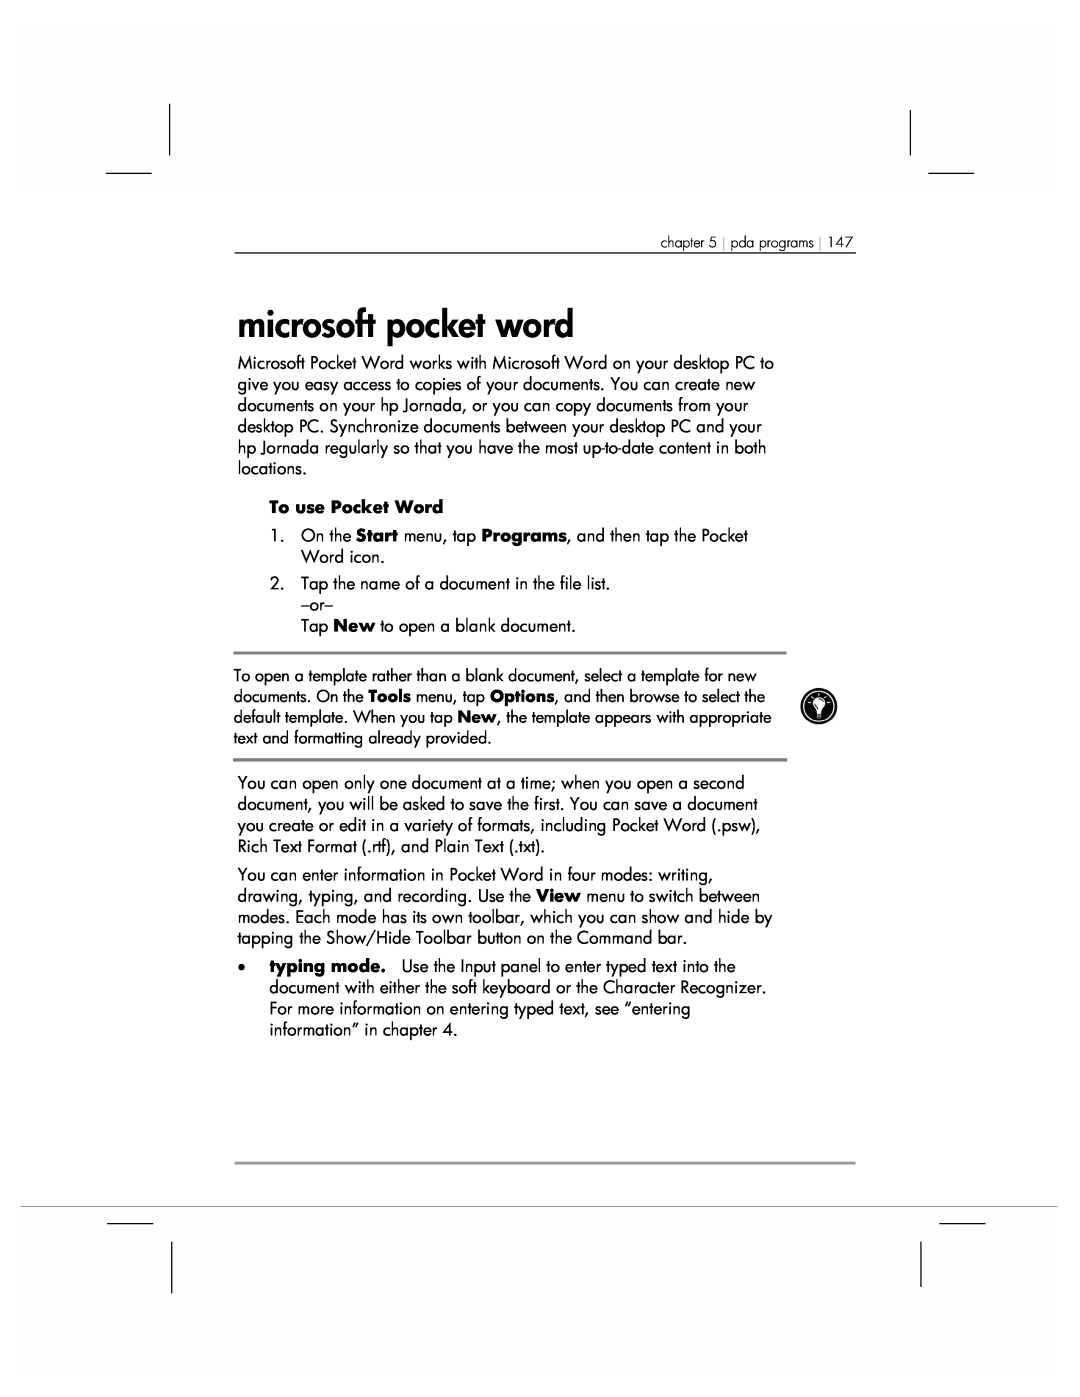 HP 920 manual microsoft pocket word, To use Pocket Word 